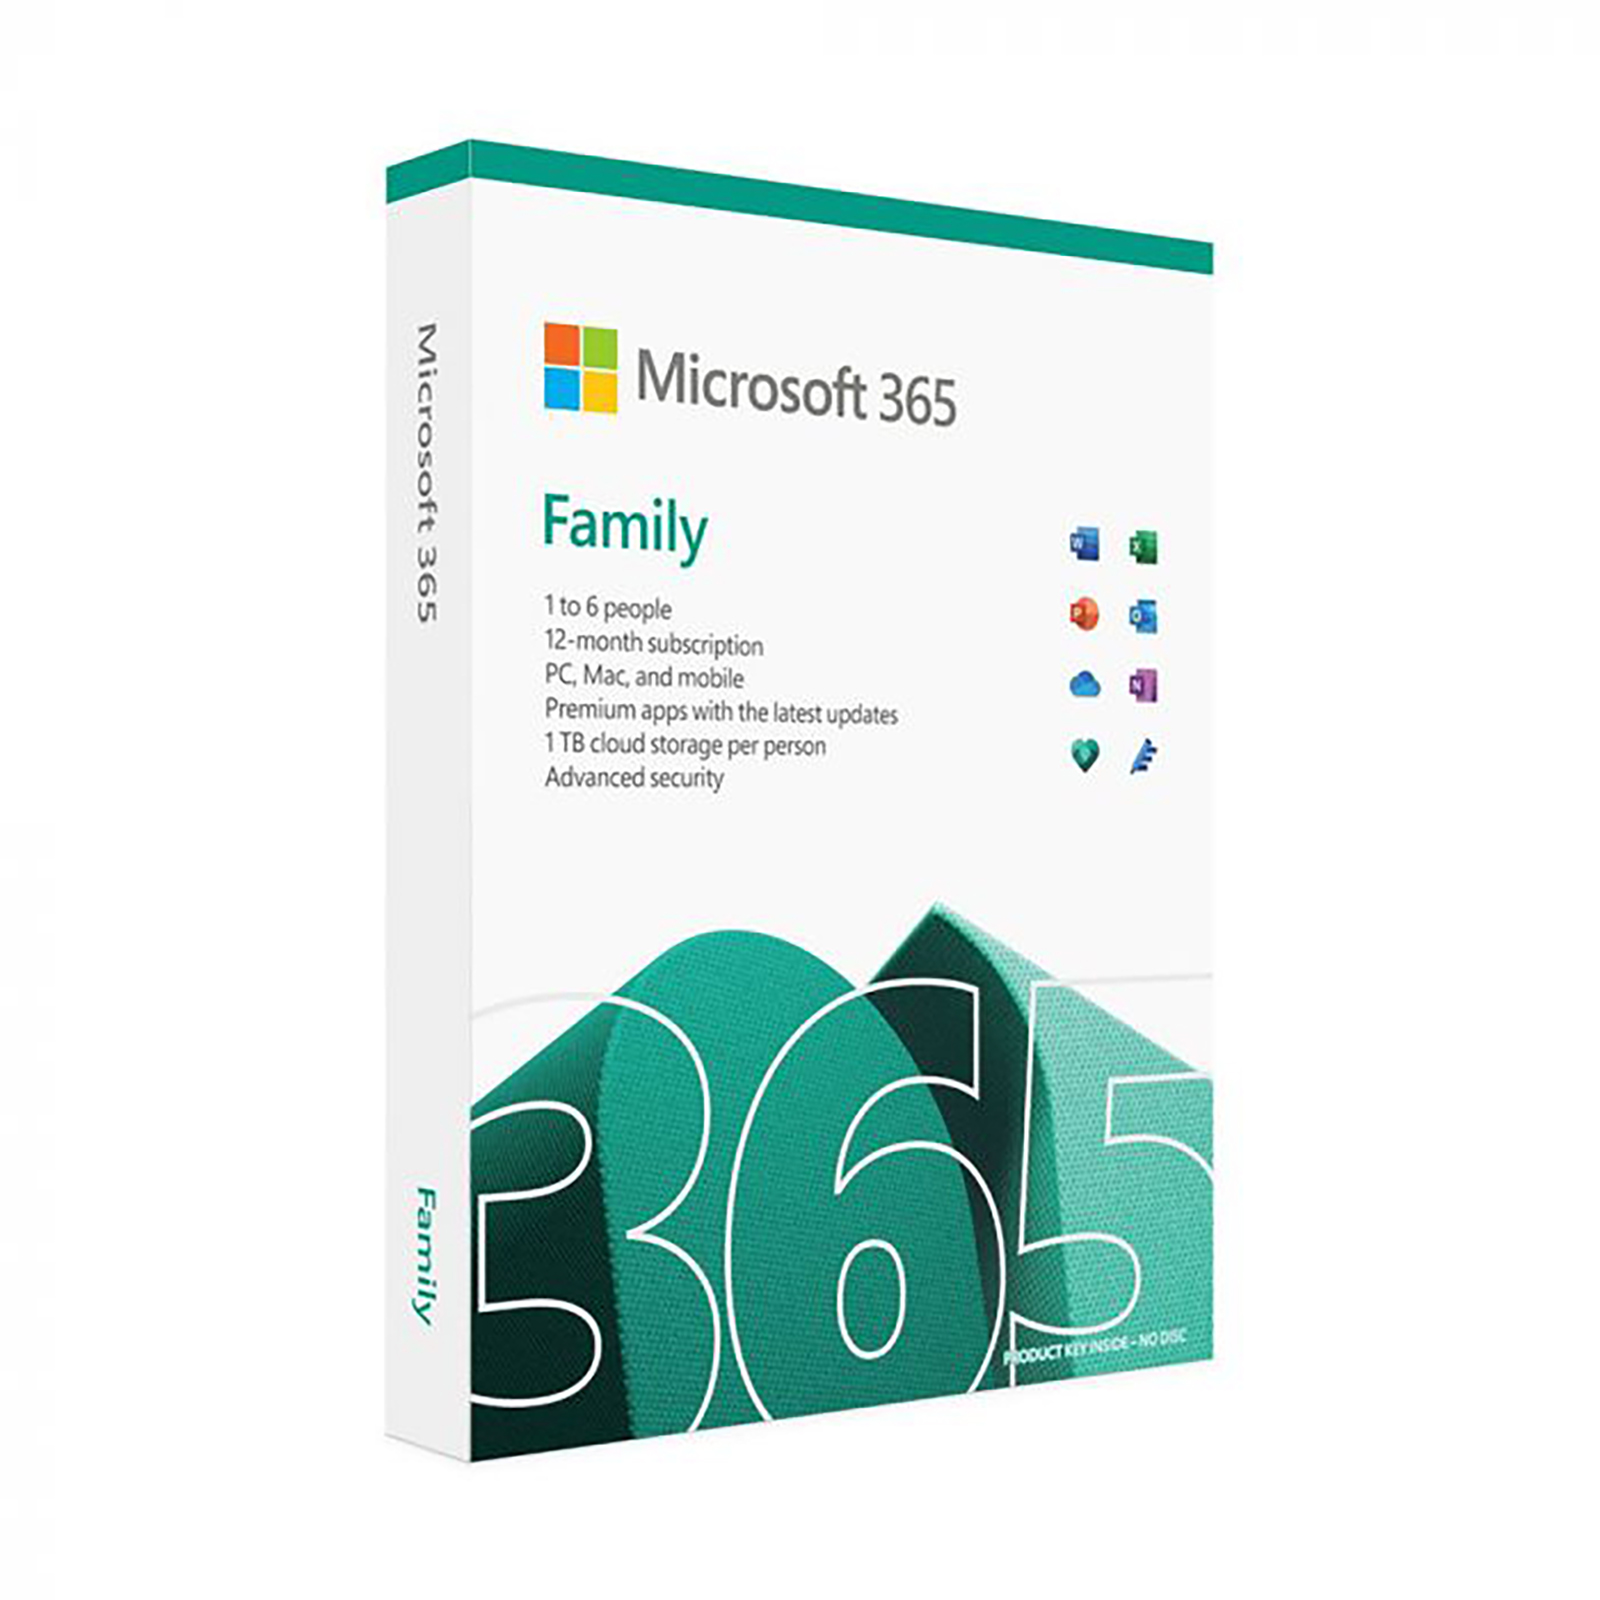 1 x Microsoft 365 Family (1 Year)